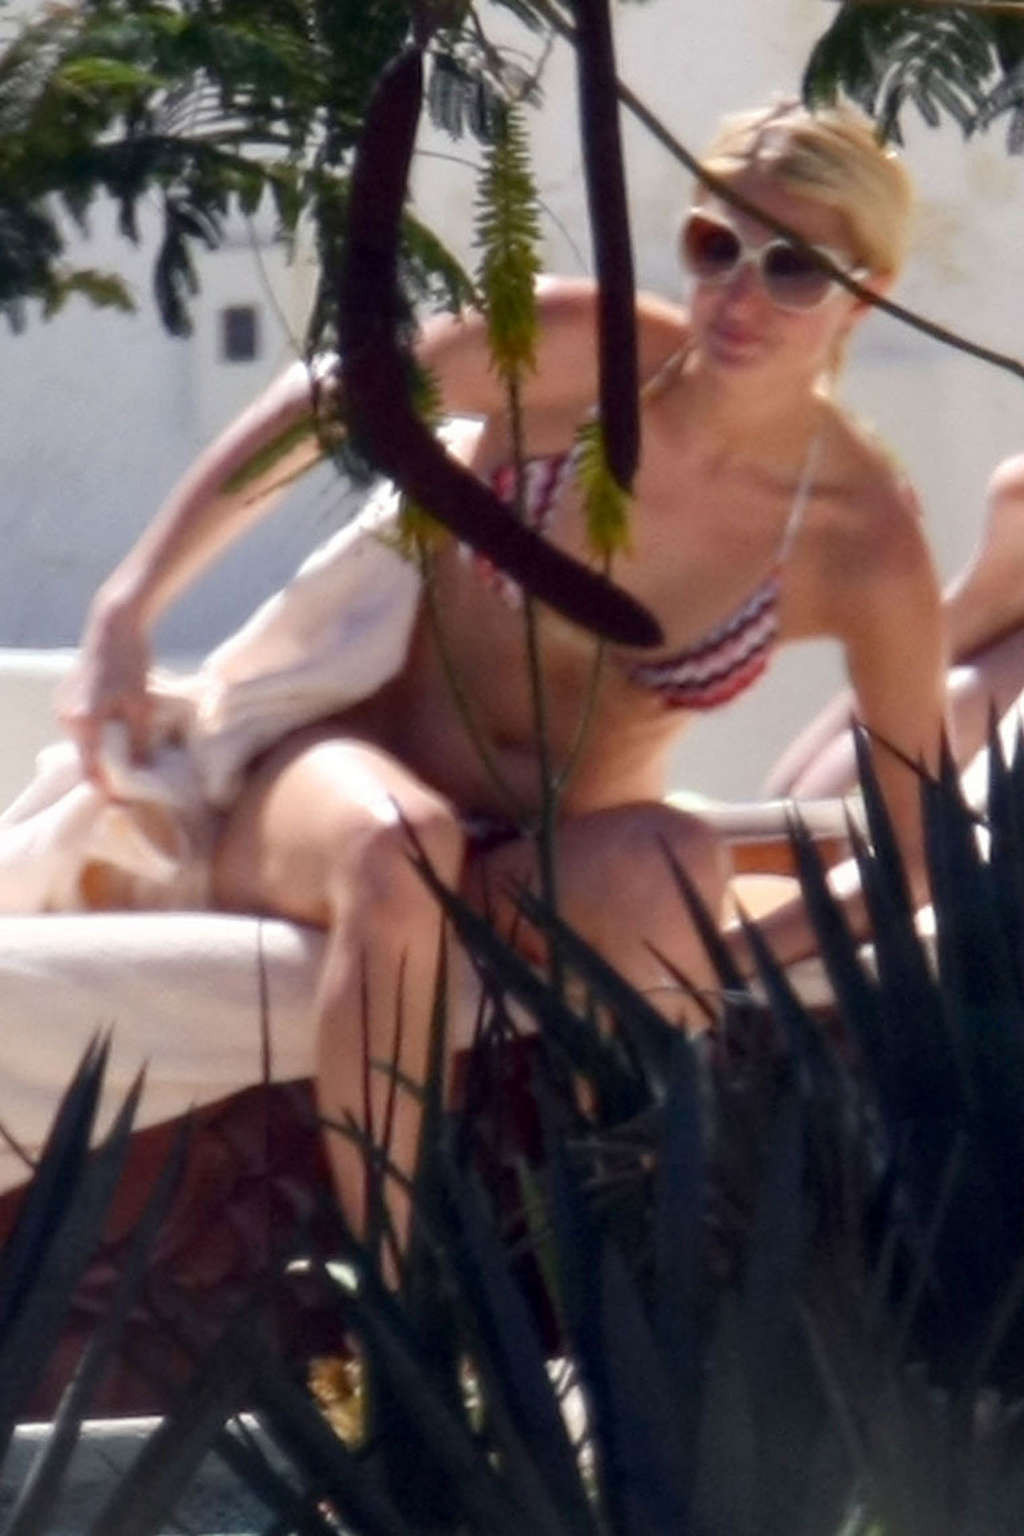 Paris Hilton enjoying on pool in topless very hot photos #75356448